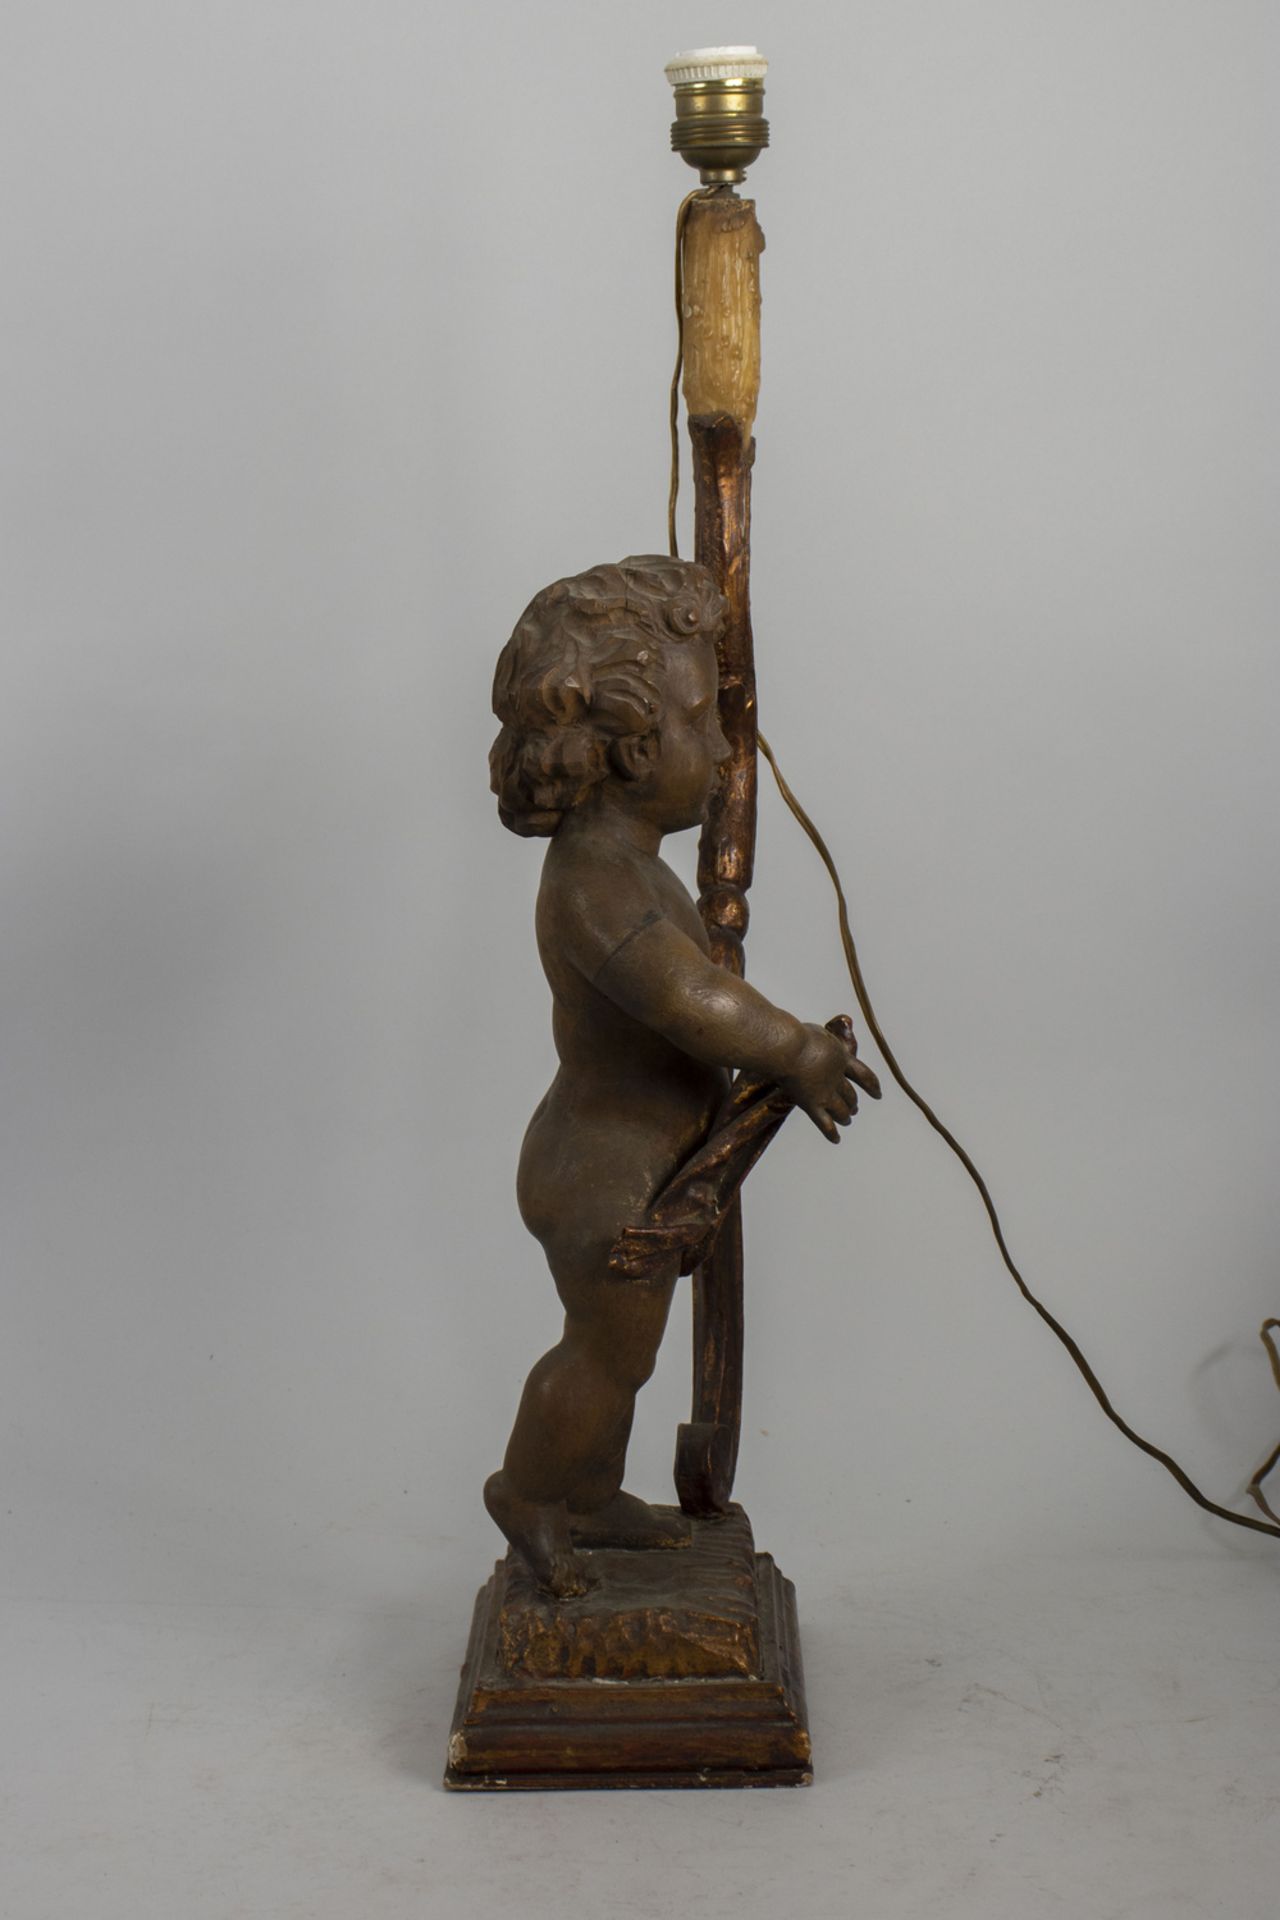 Figurenlampe 'Putto' / A figural lamp 'Cherub' - Image 4 of 9